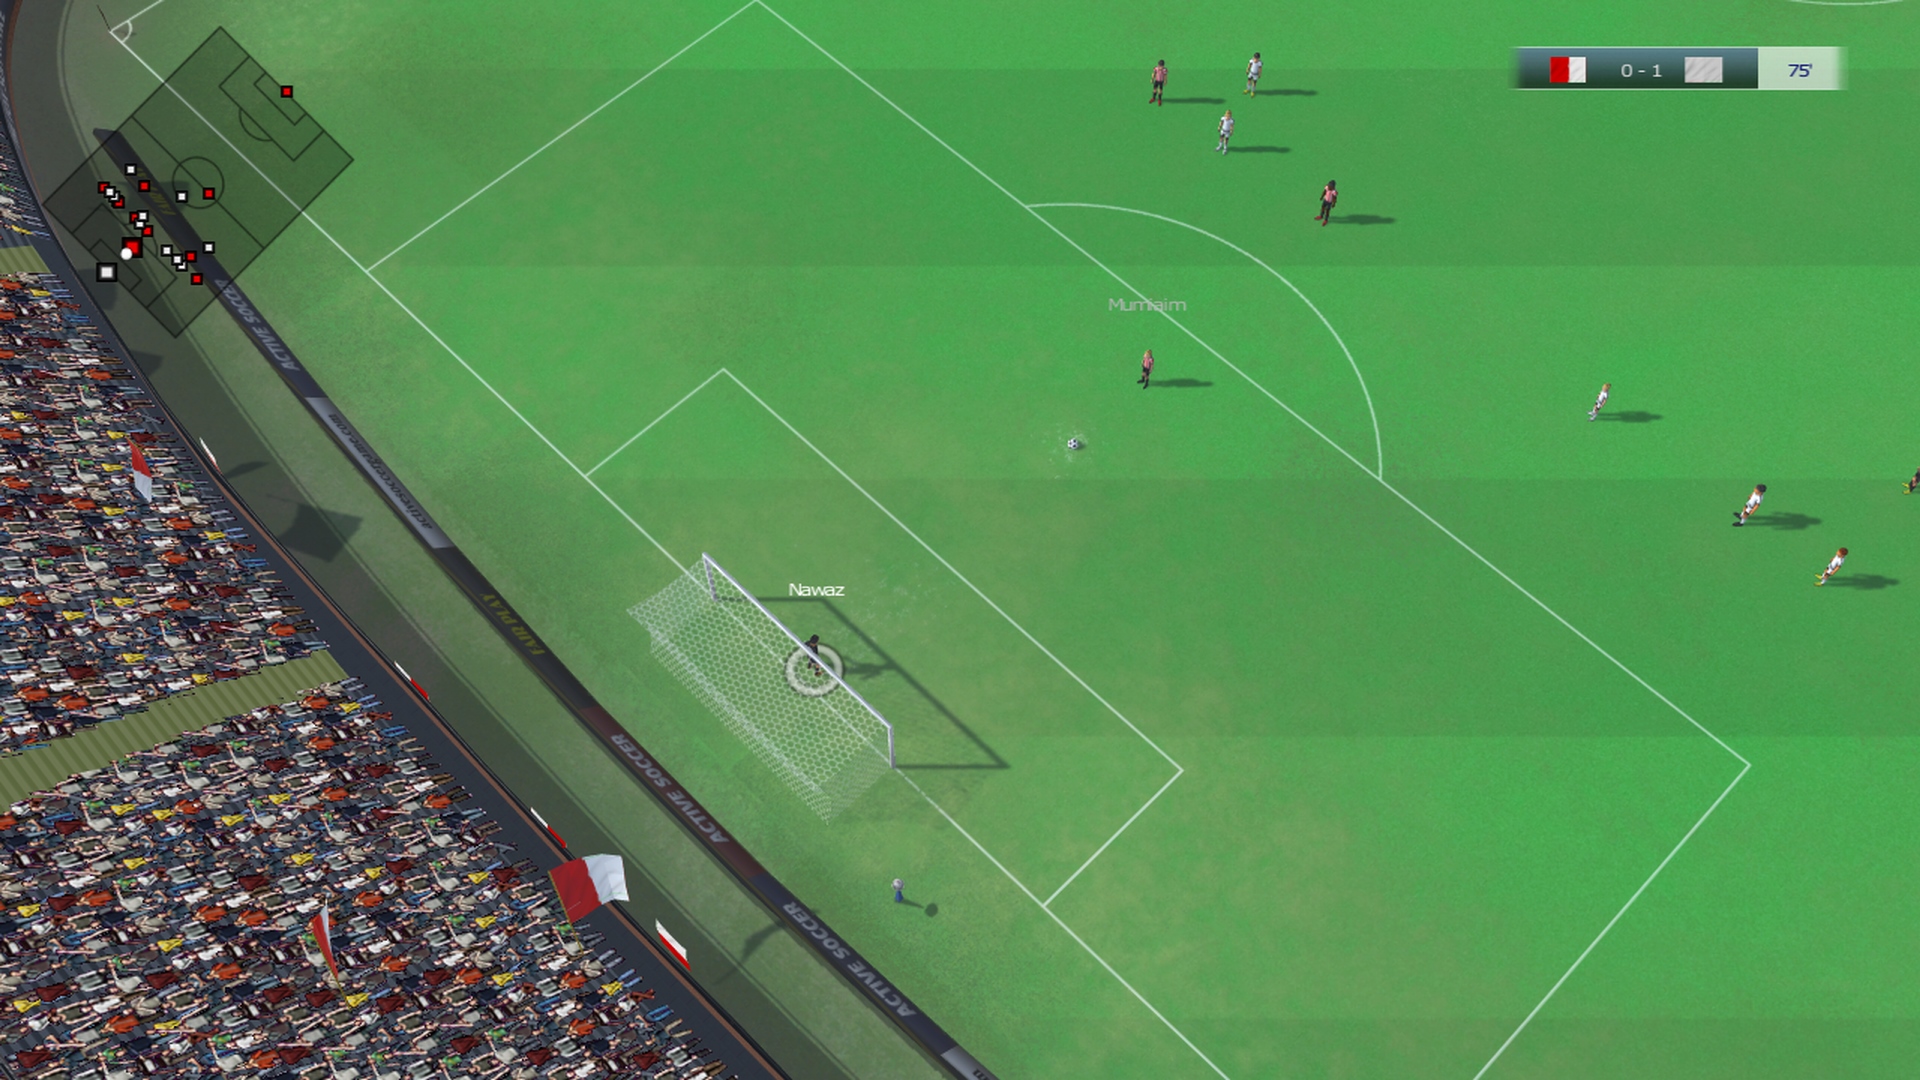 Active Soccer 2 DX Vyvenie hernch situci nie je vbec idelne.